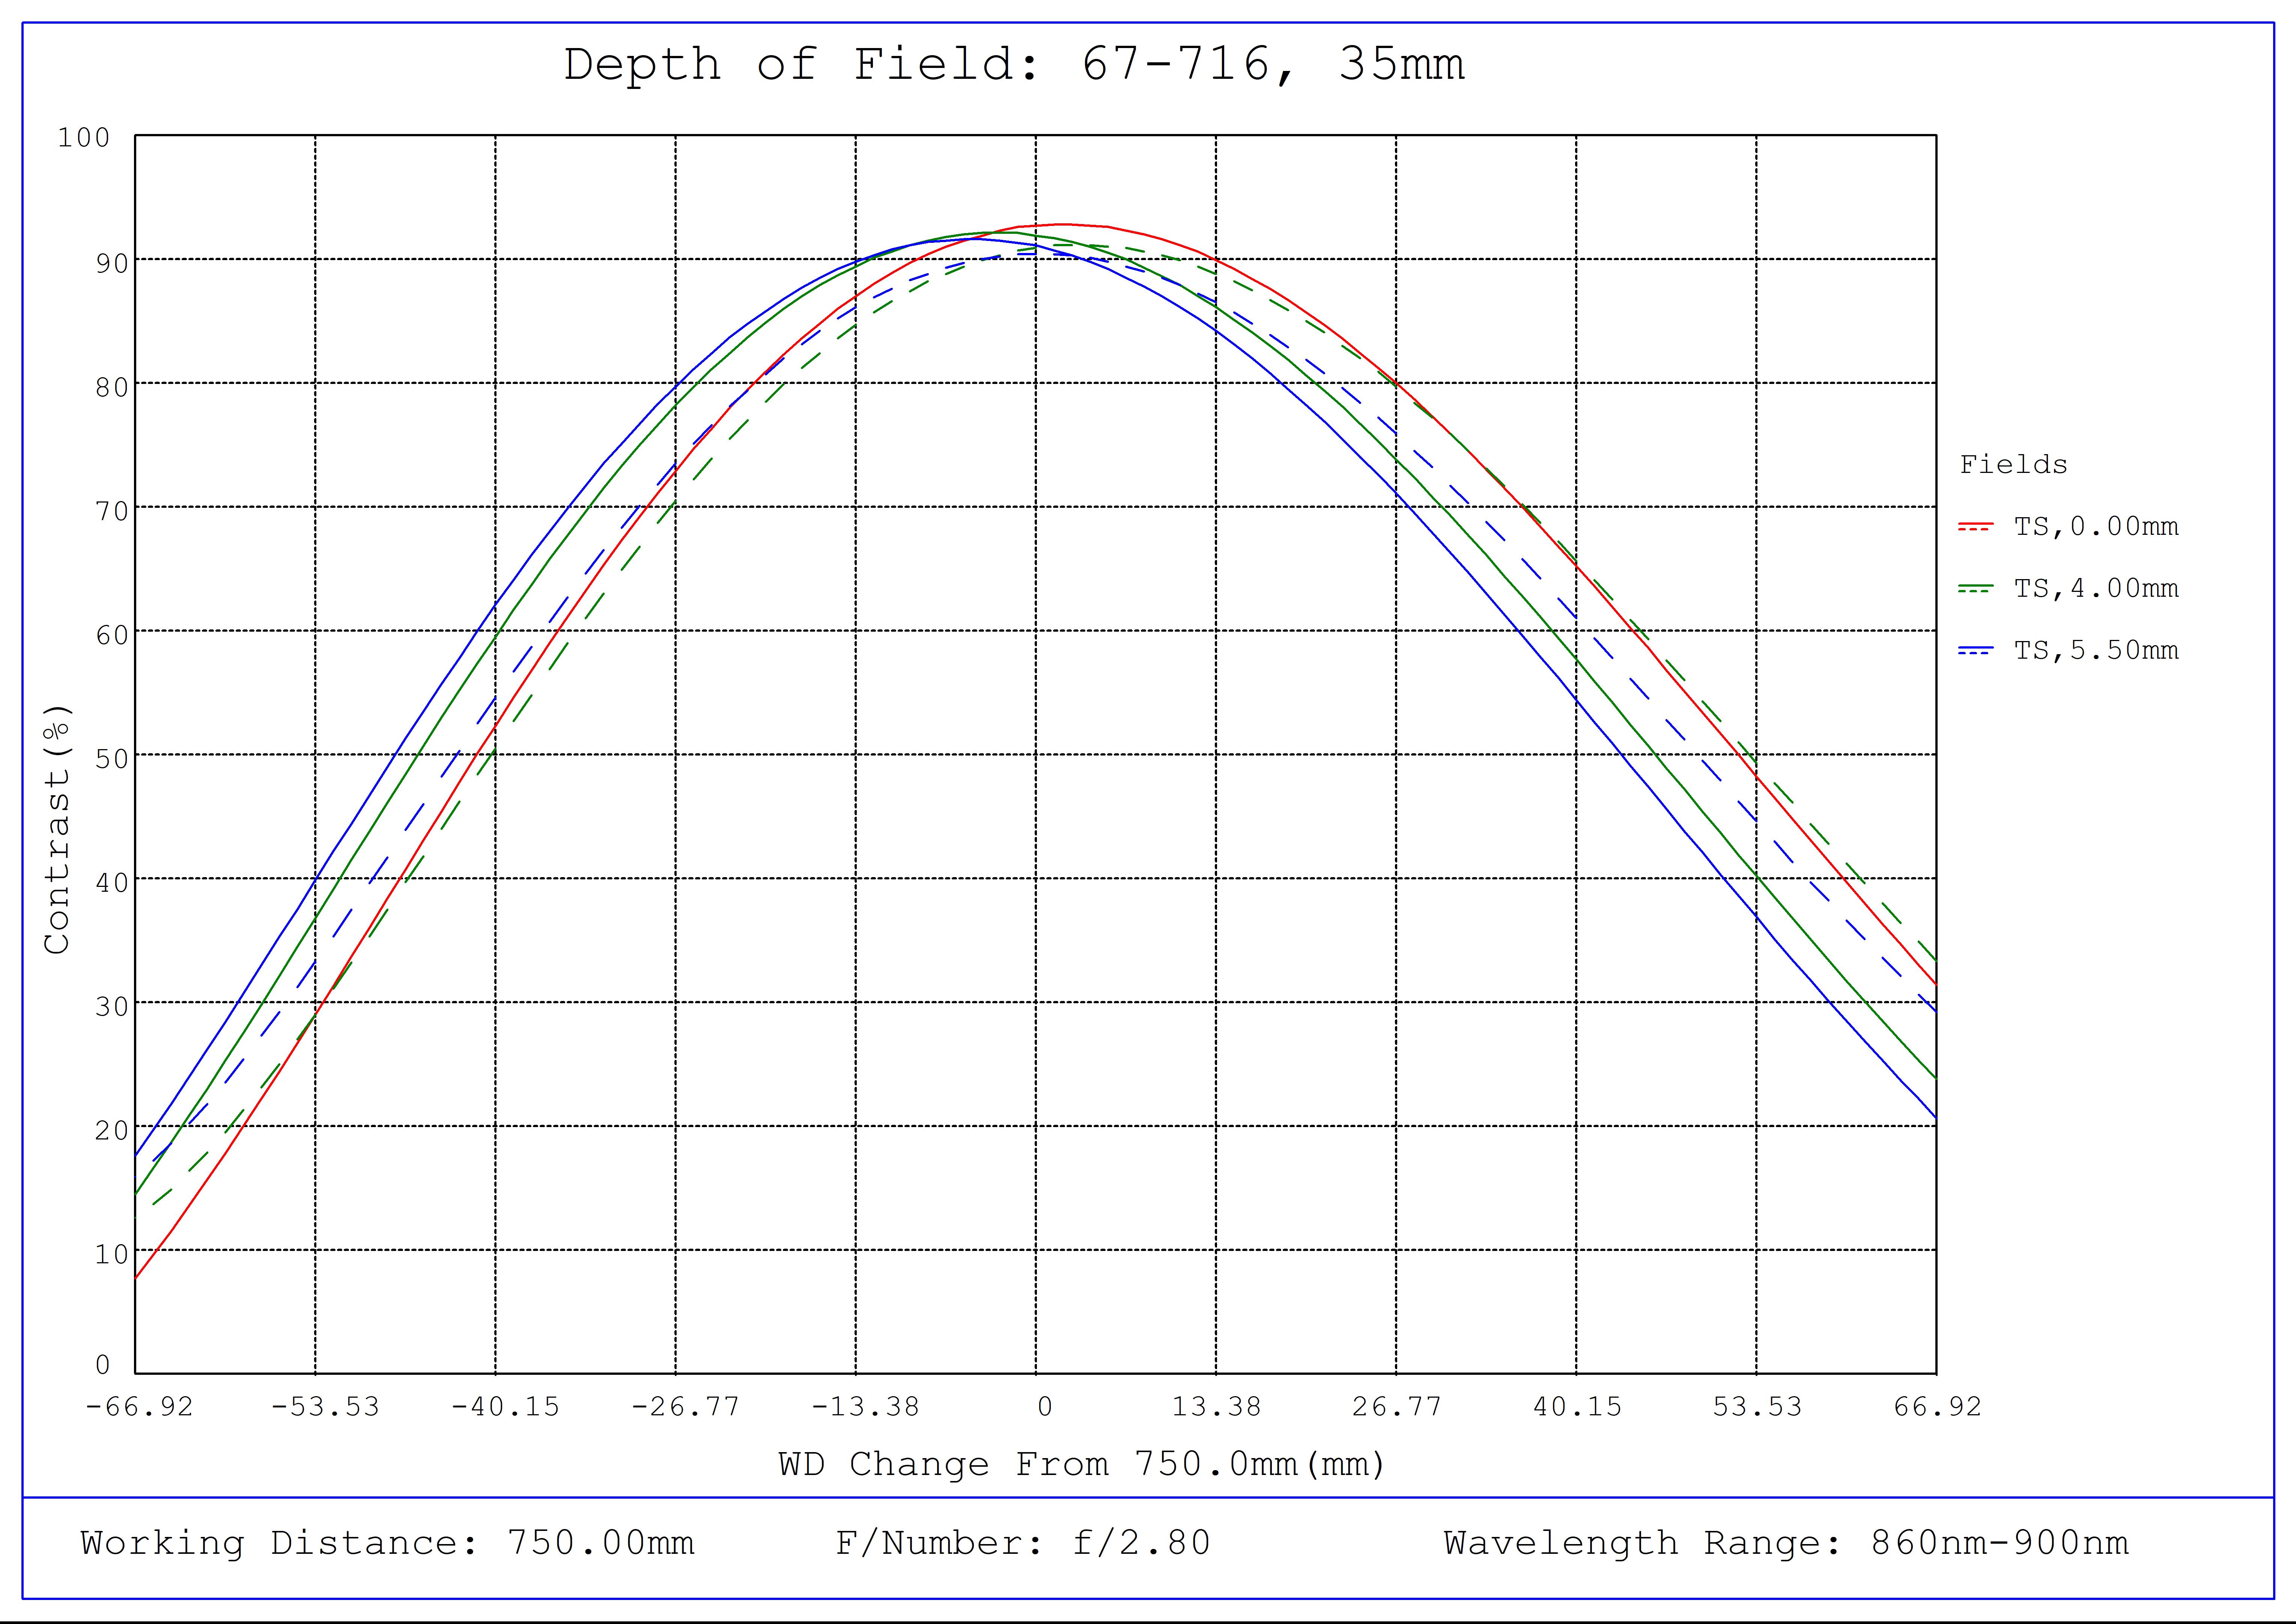 #67-716, 35mm C VIS-NIR Series Fixed Focal Length Lens, Depth of Field Plot (NIR), 750mm Working Distance, f2.8